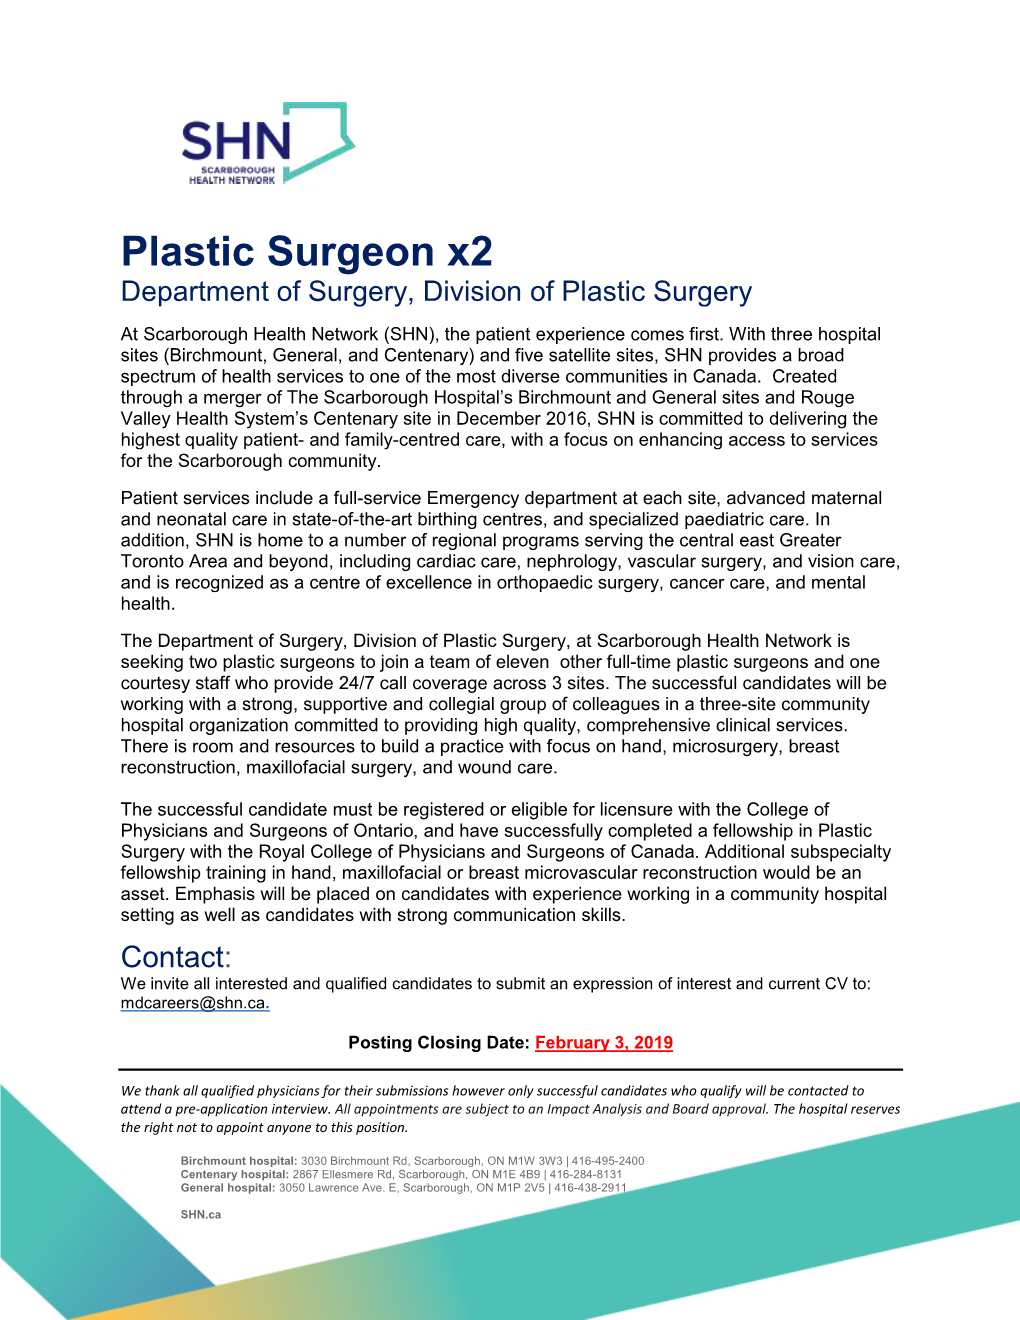 Plastic Surgeon X2 Department of Surgery, Division of Plastic Surgery